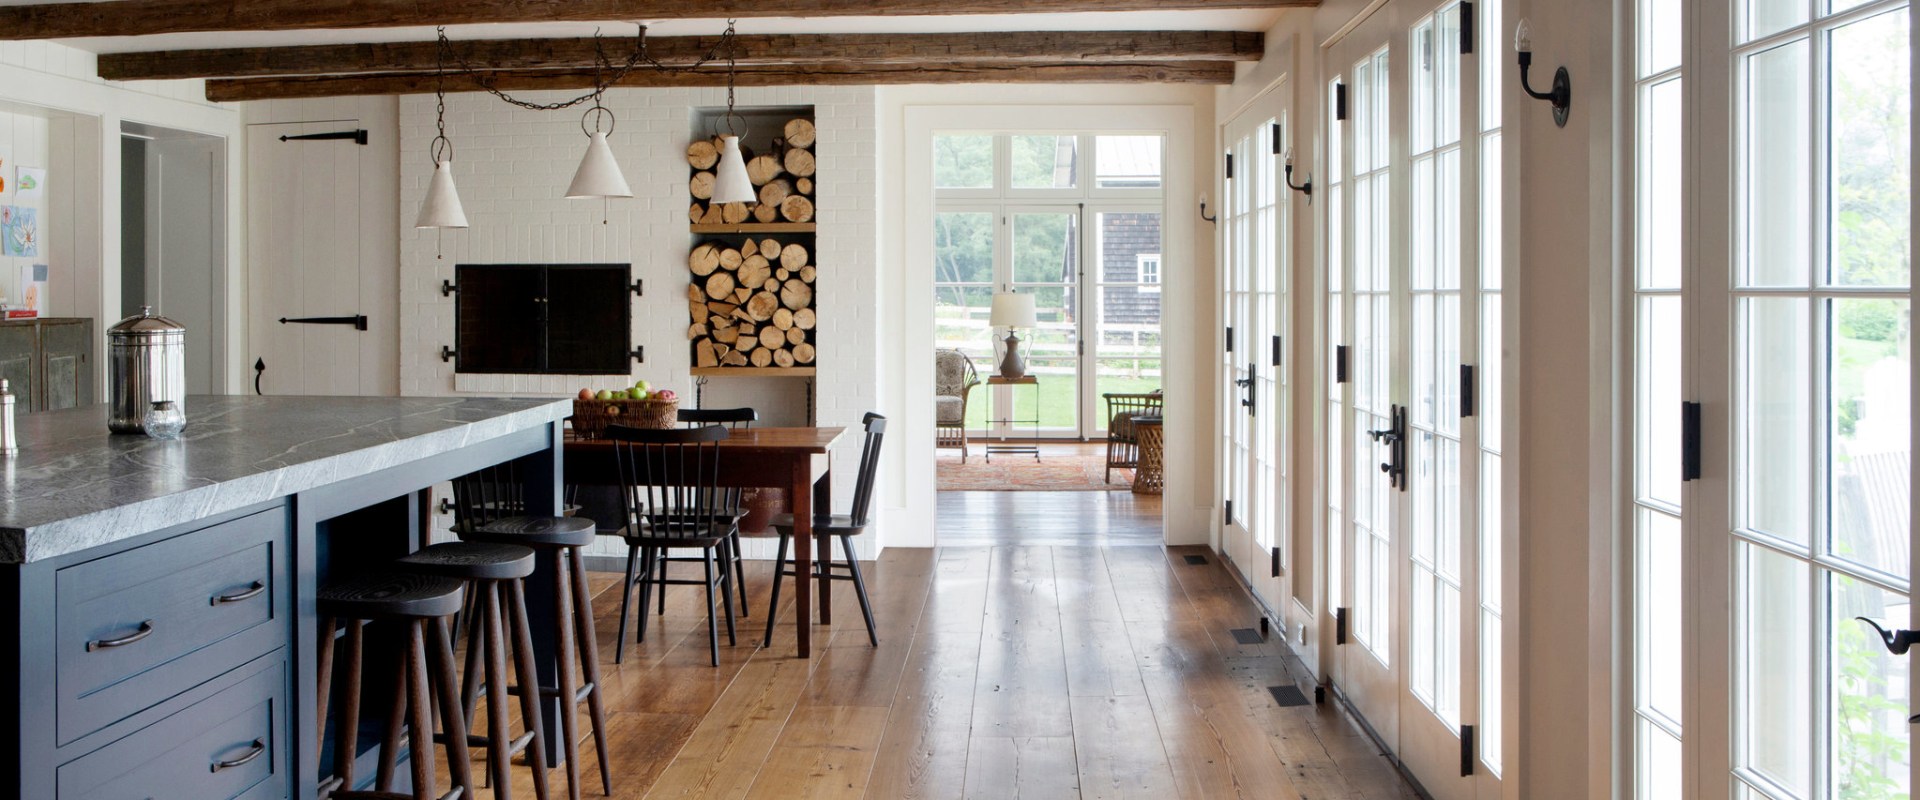 Is hardwood flooring better?